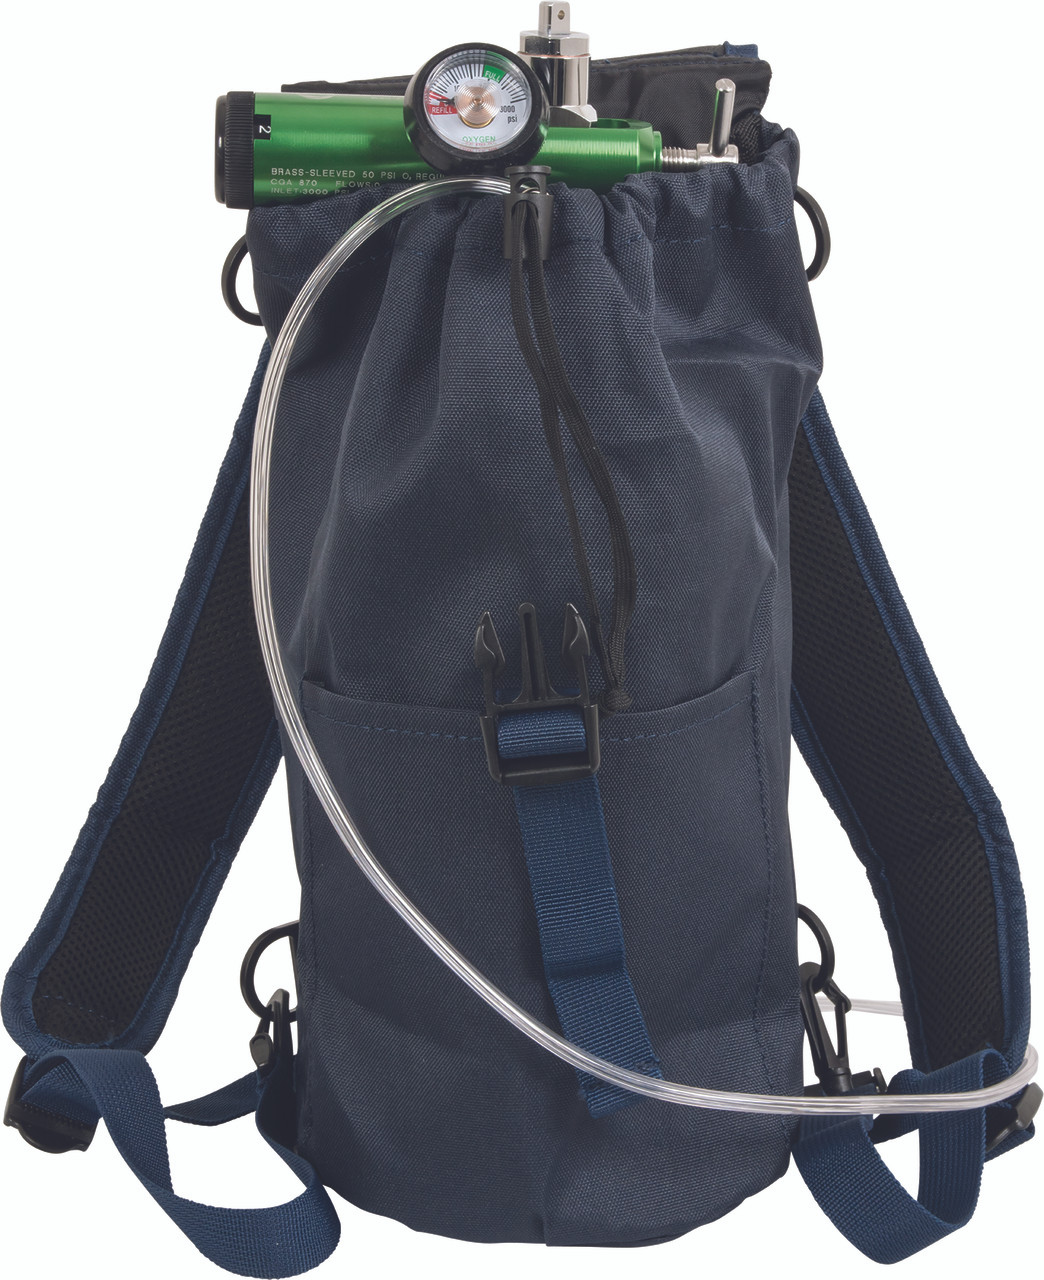 Backpack for D Oxygen Tank | Bag for M15 Oxygen Cylinder | iGuerburn O2 Tank  Holder | Respiratory Care — Products for Health